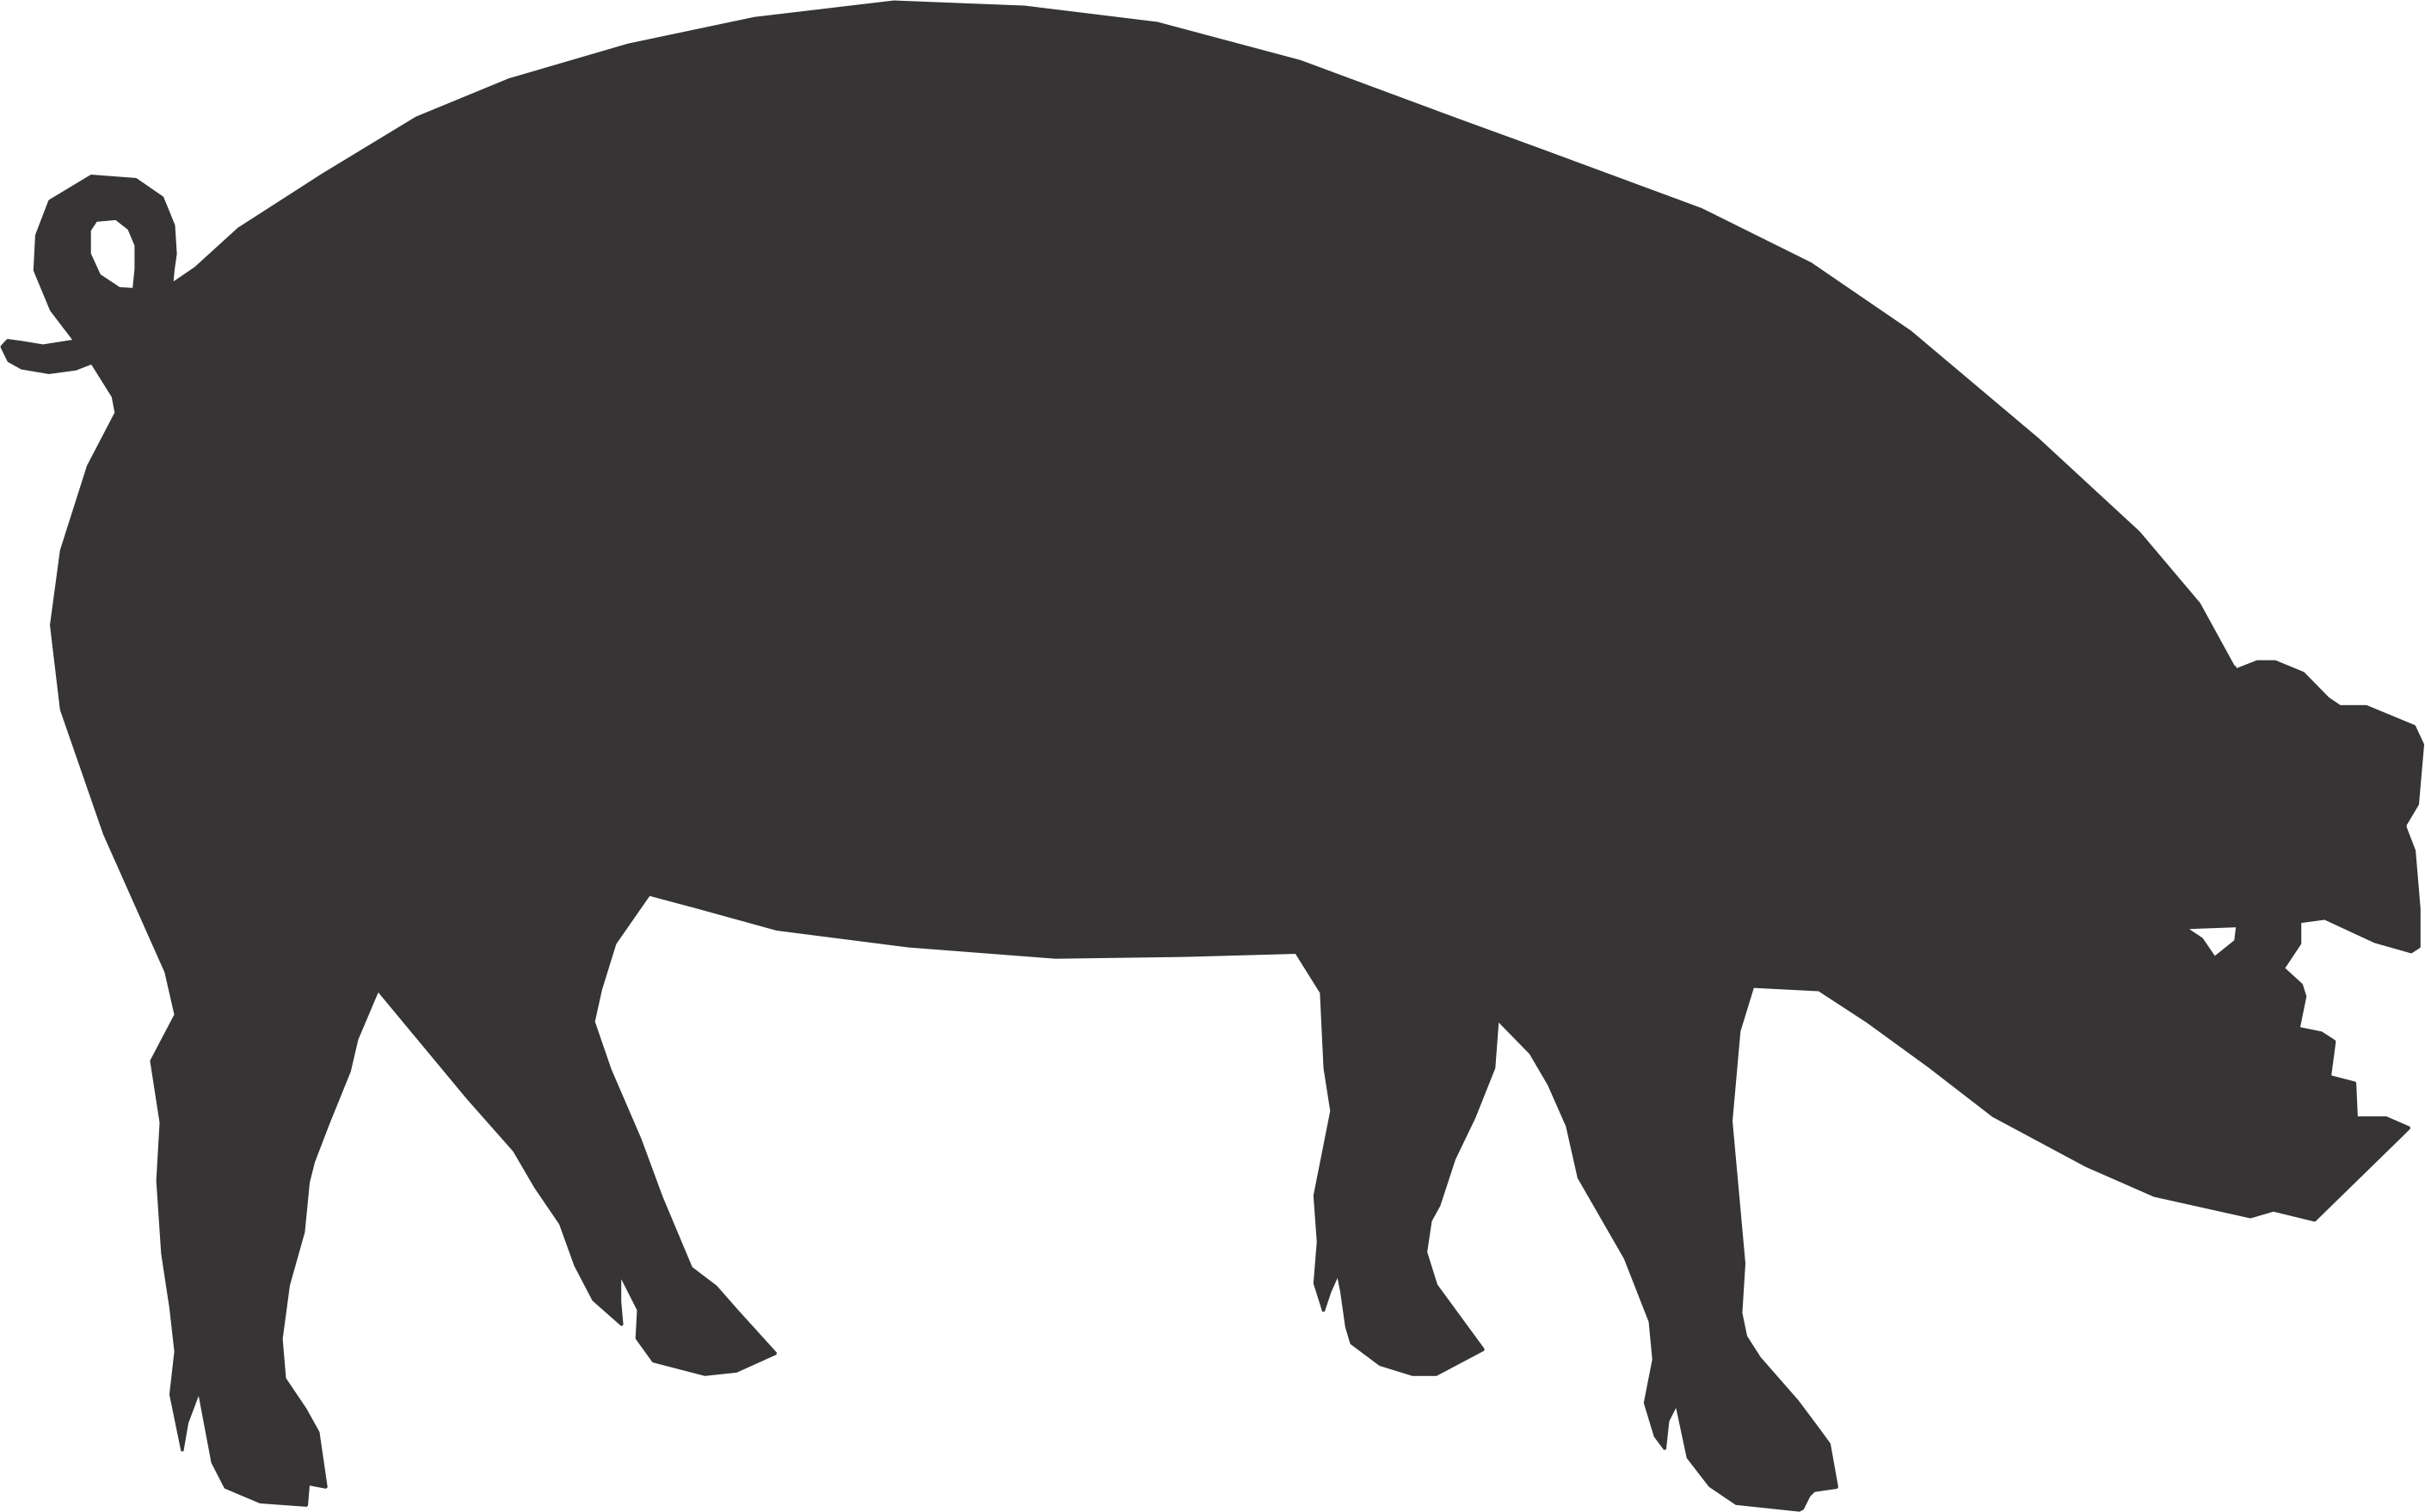 Pig Clip Art - Pig Silhouette